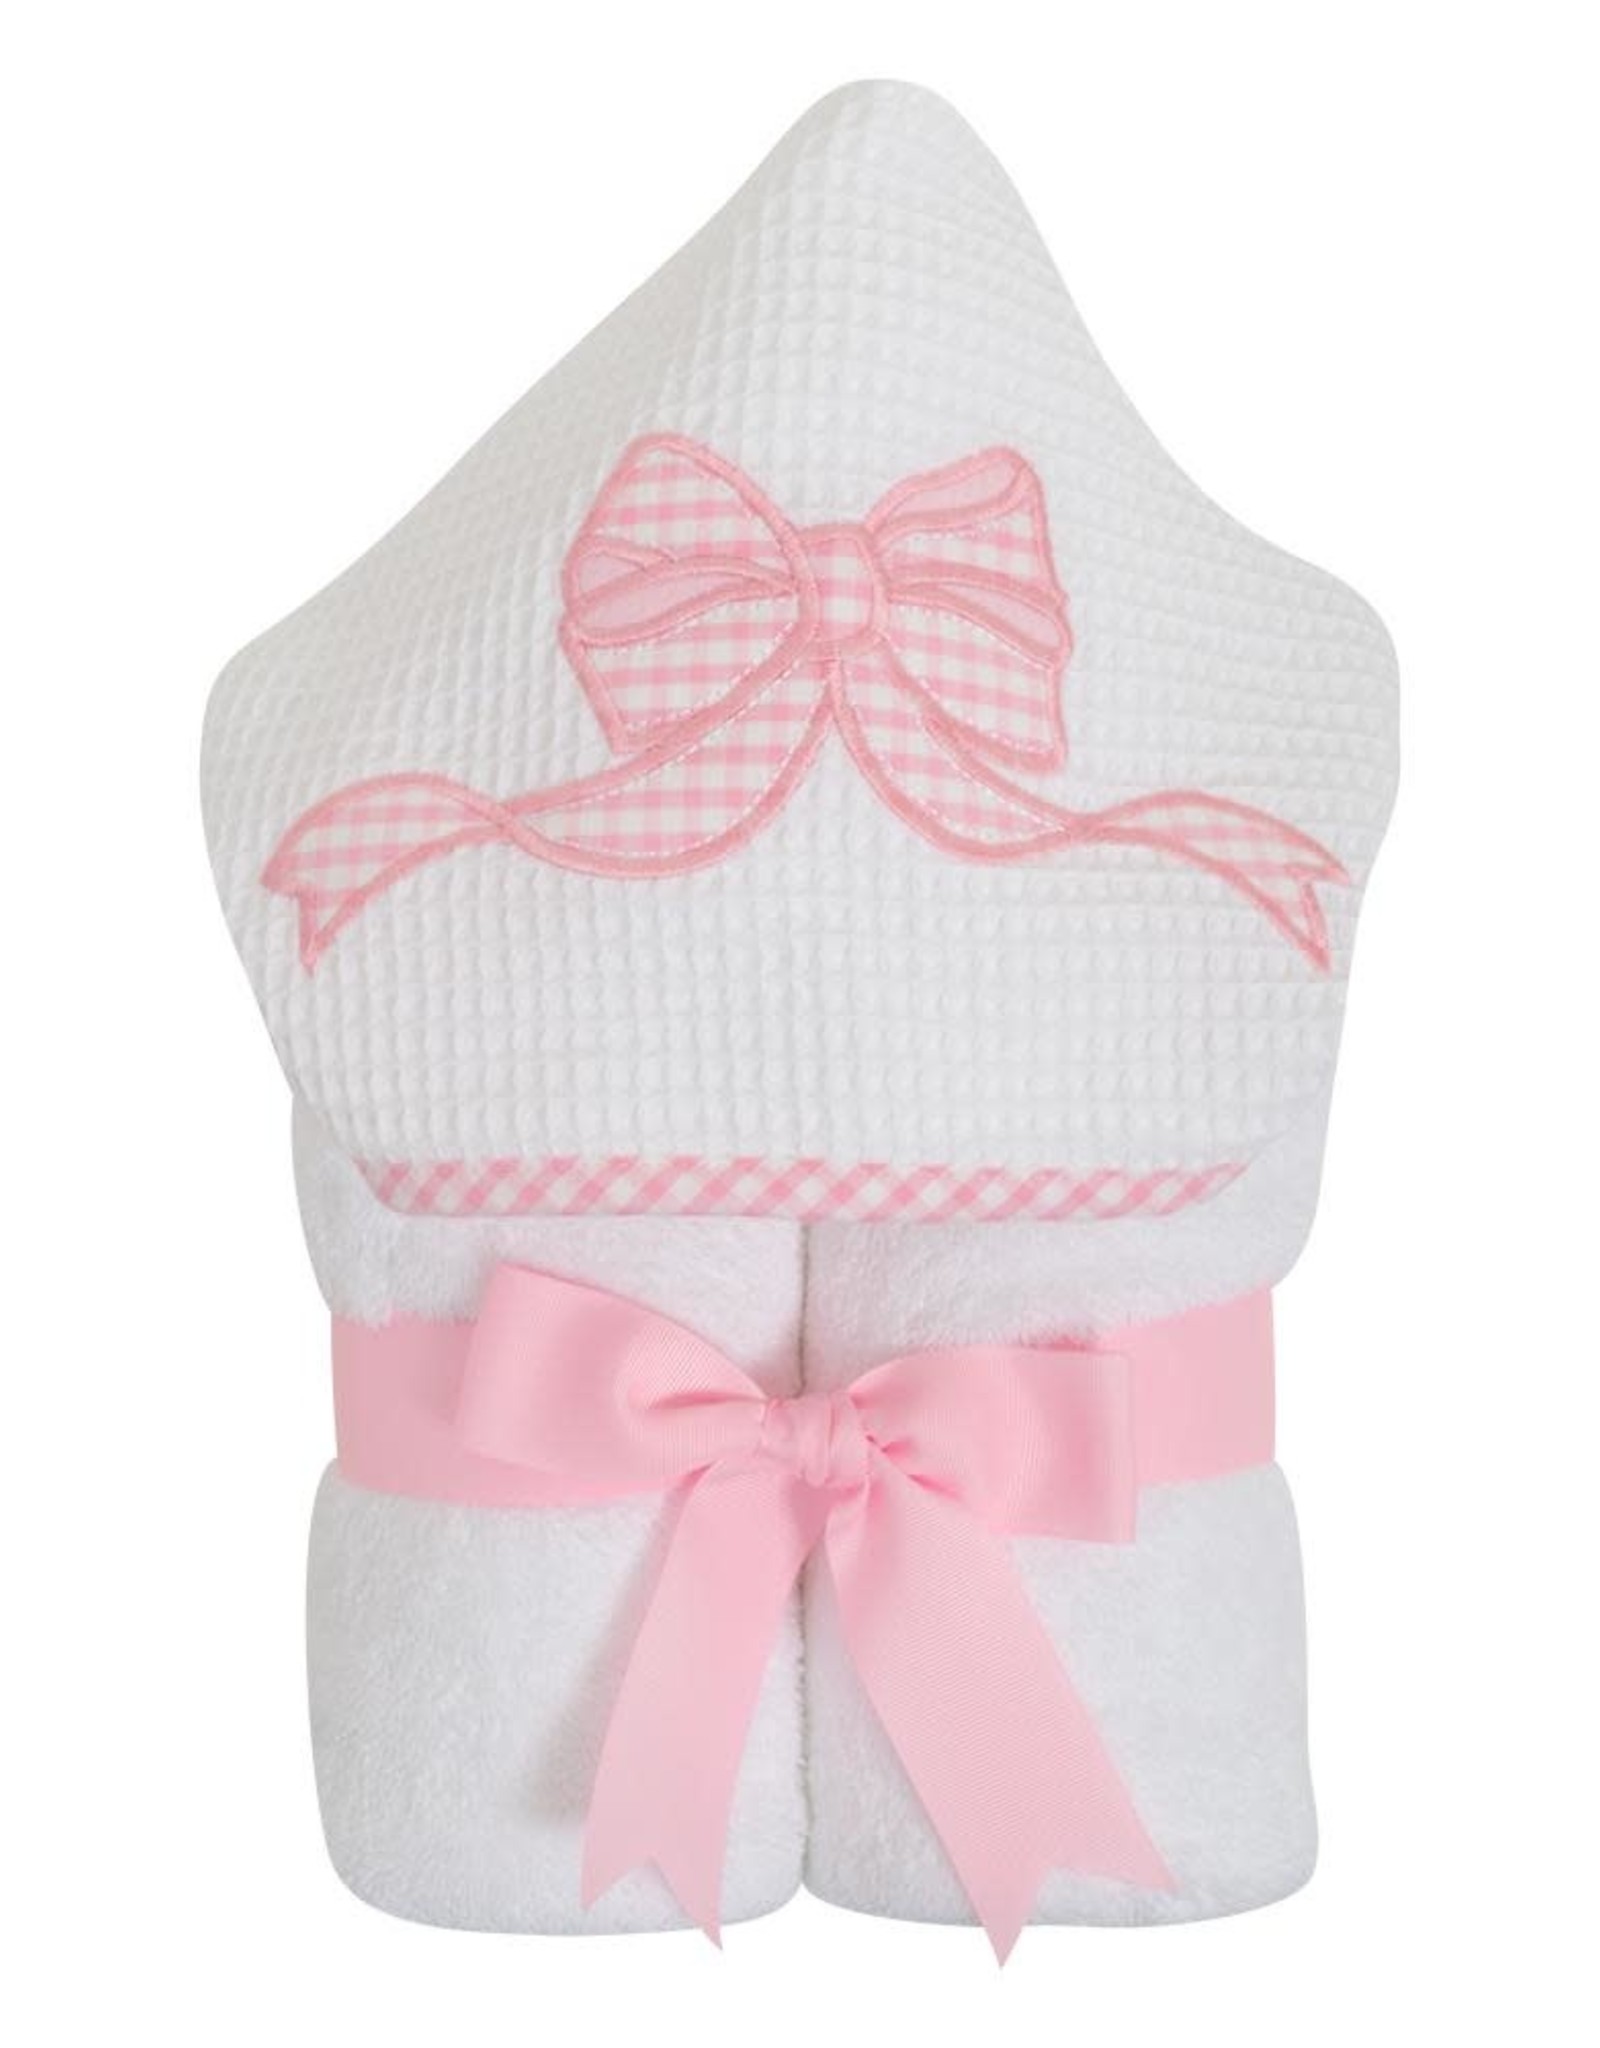 Three Marthas EveryKid Towel Pink Bow